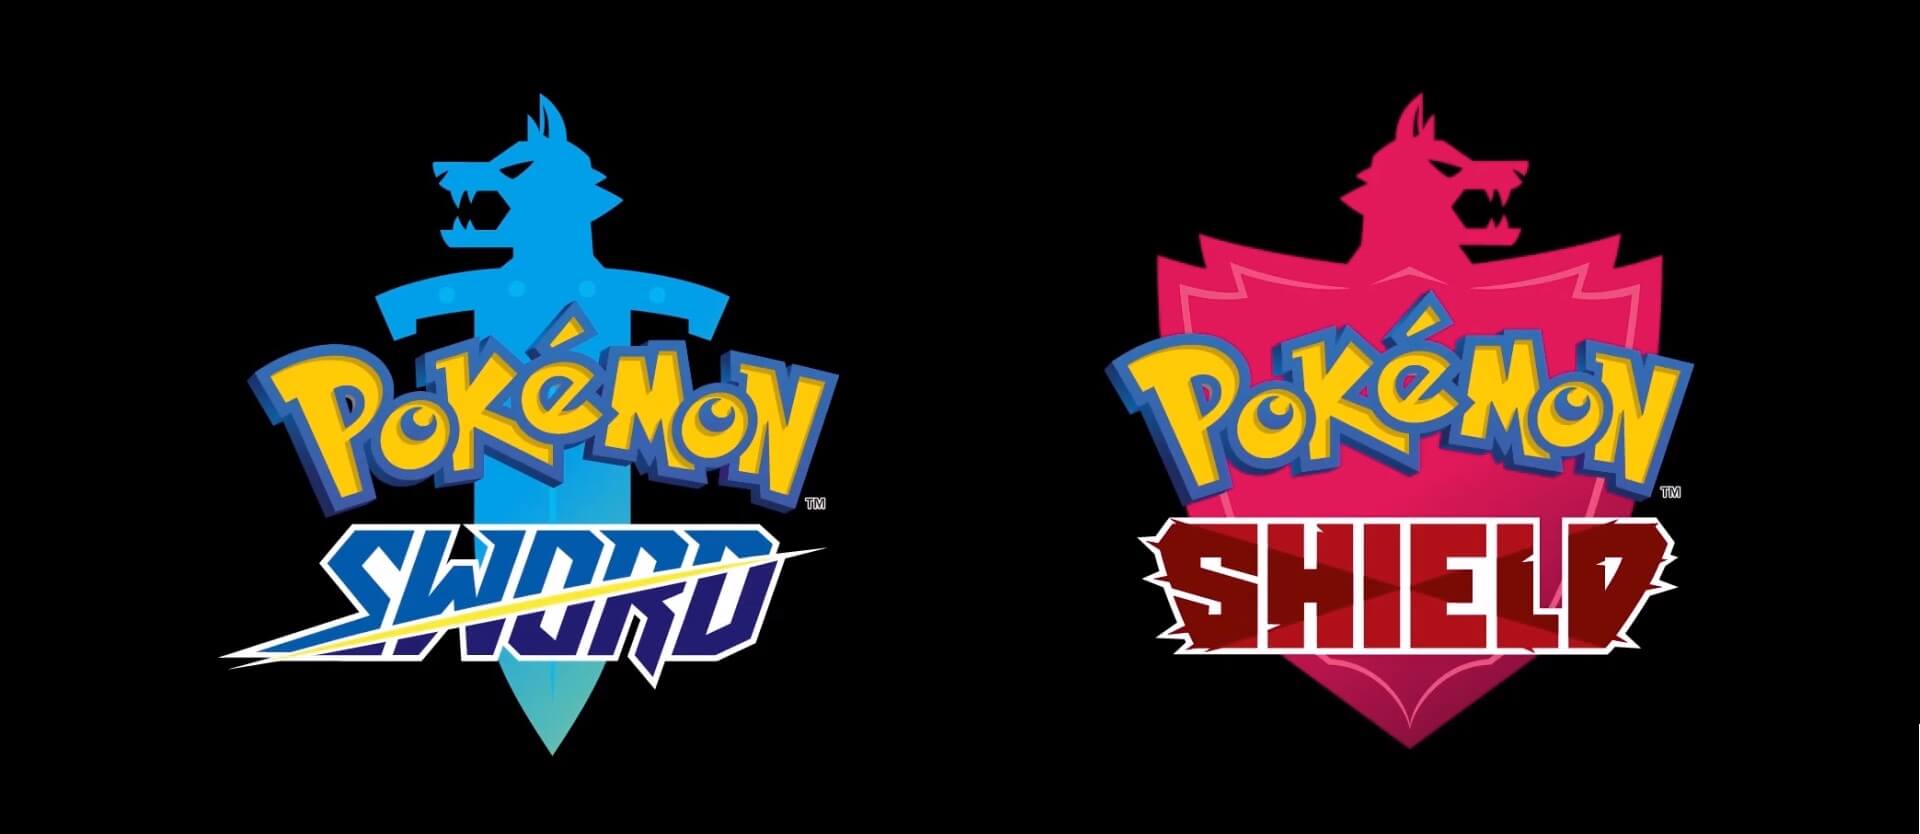 Pokemon Sword & Shield announced